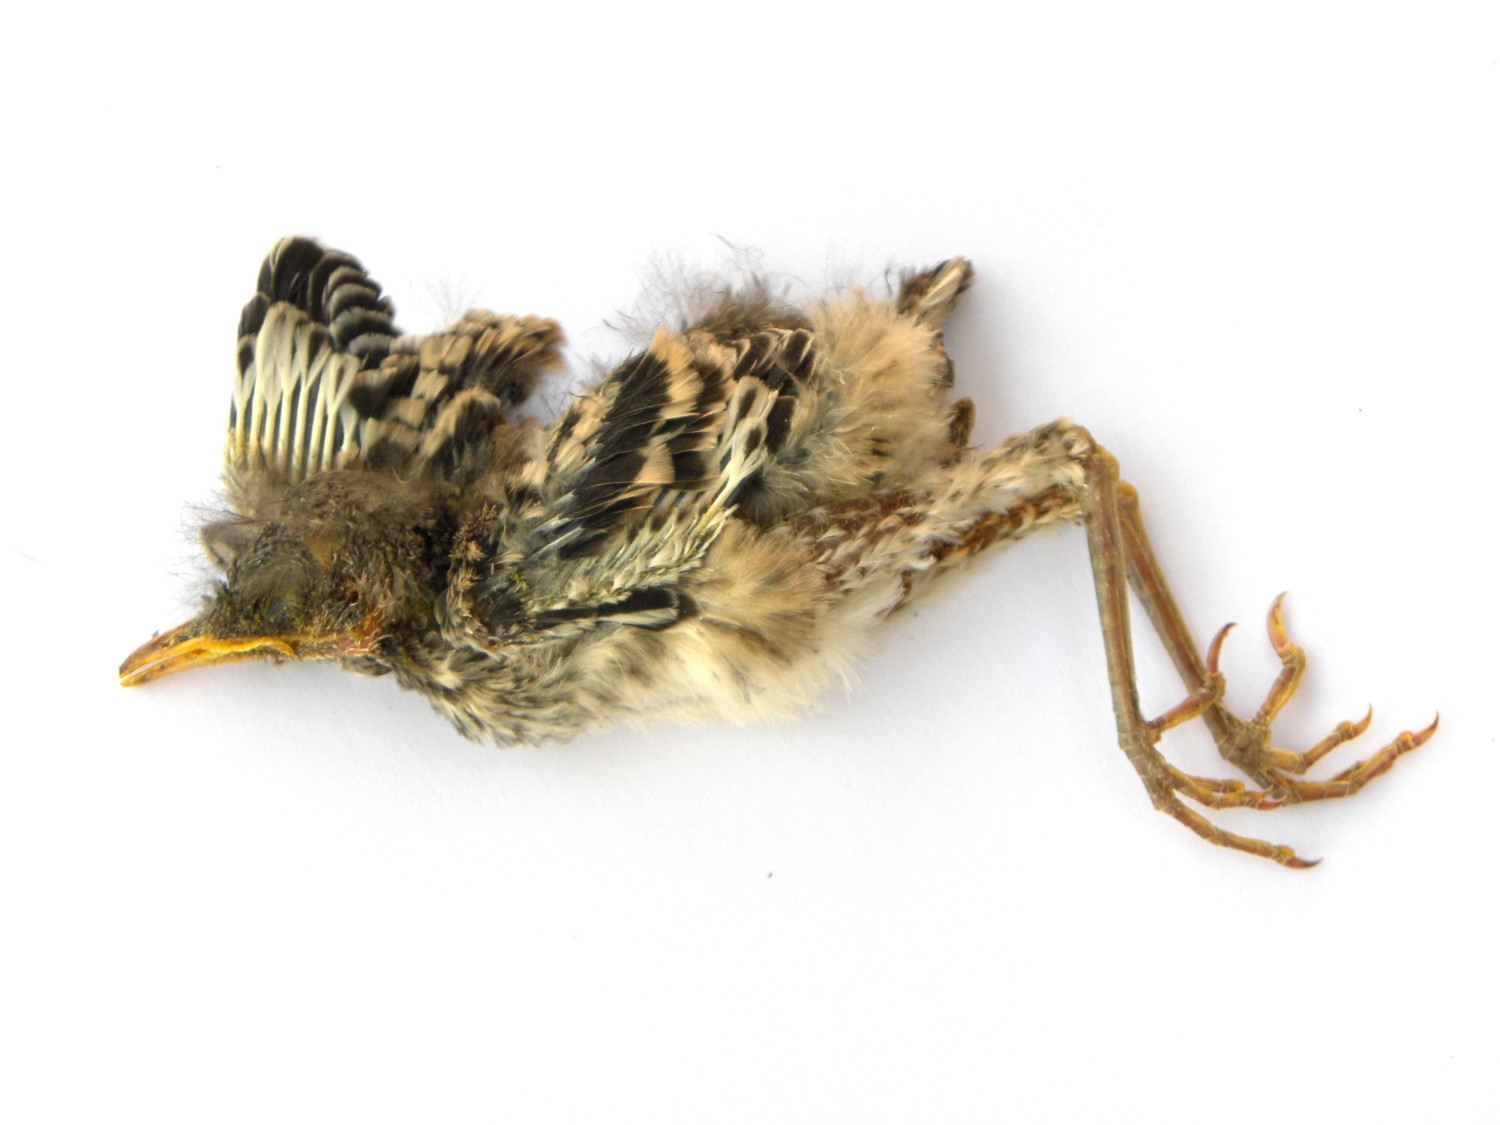 Dead bird photo by Judith Monroe